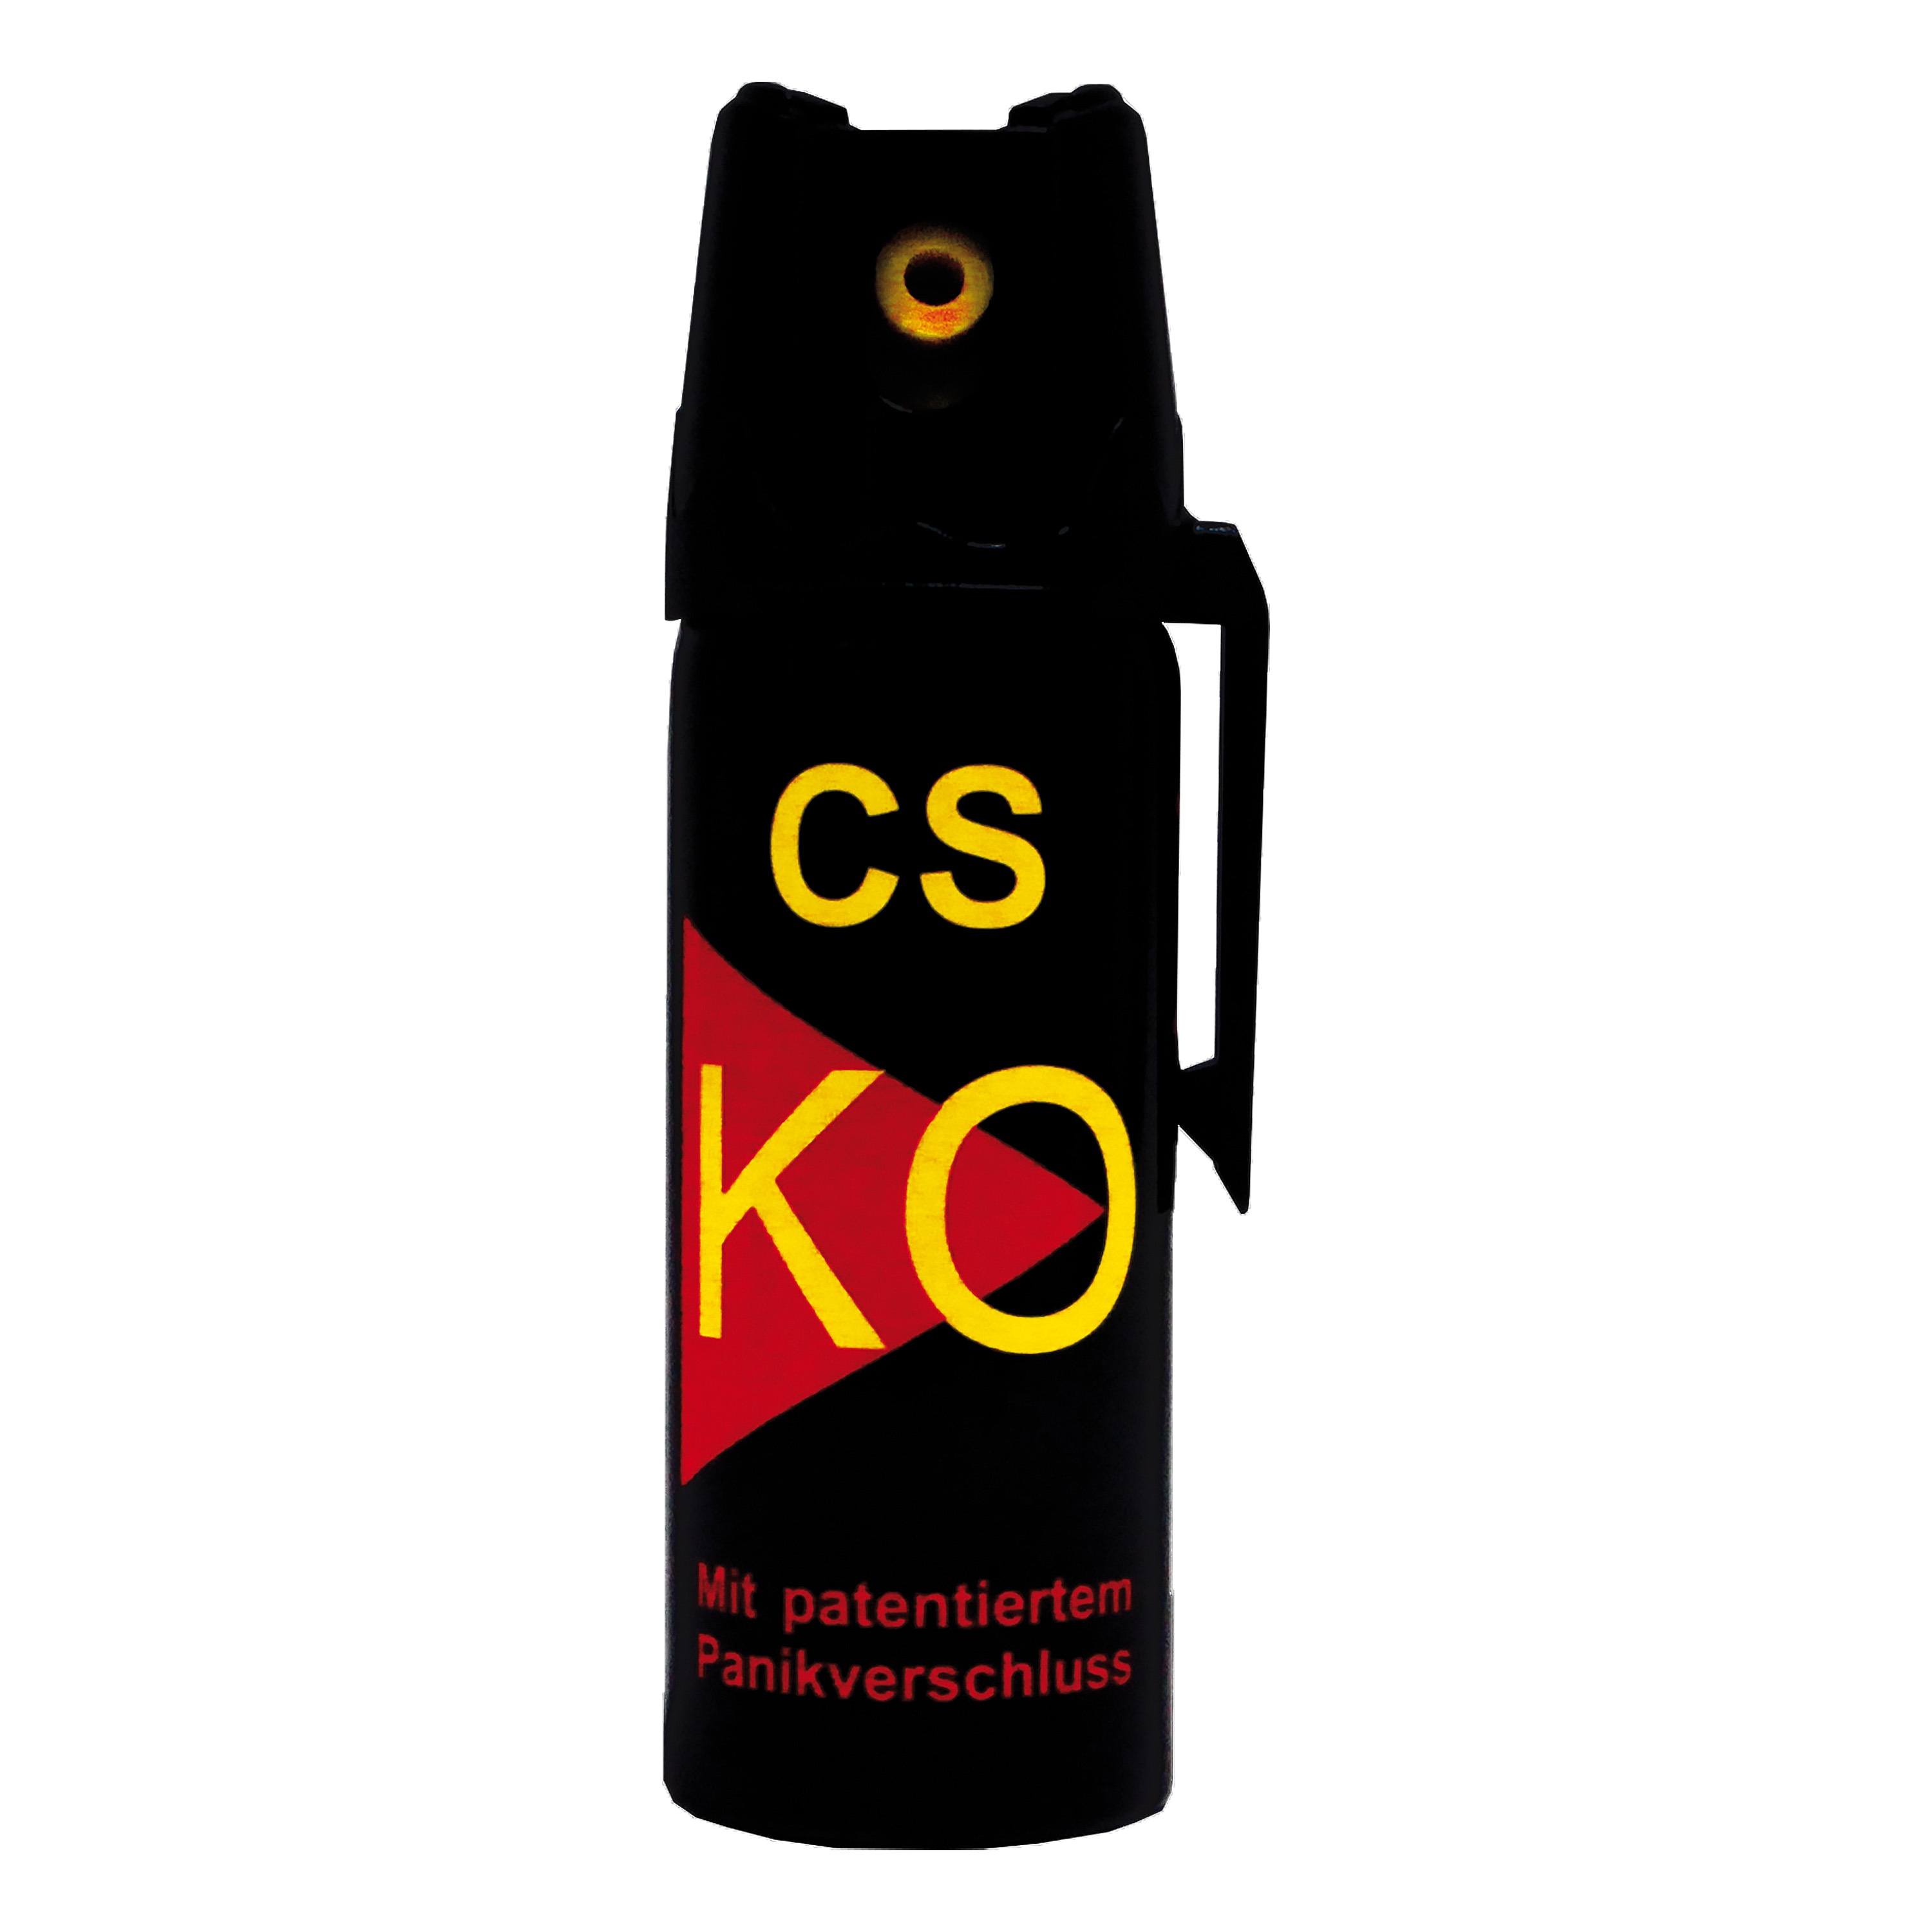 Comprar Spray de defensa CS KO 50 ml en ASMC